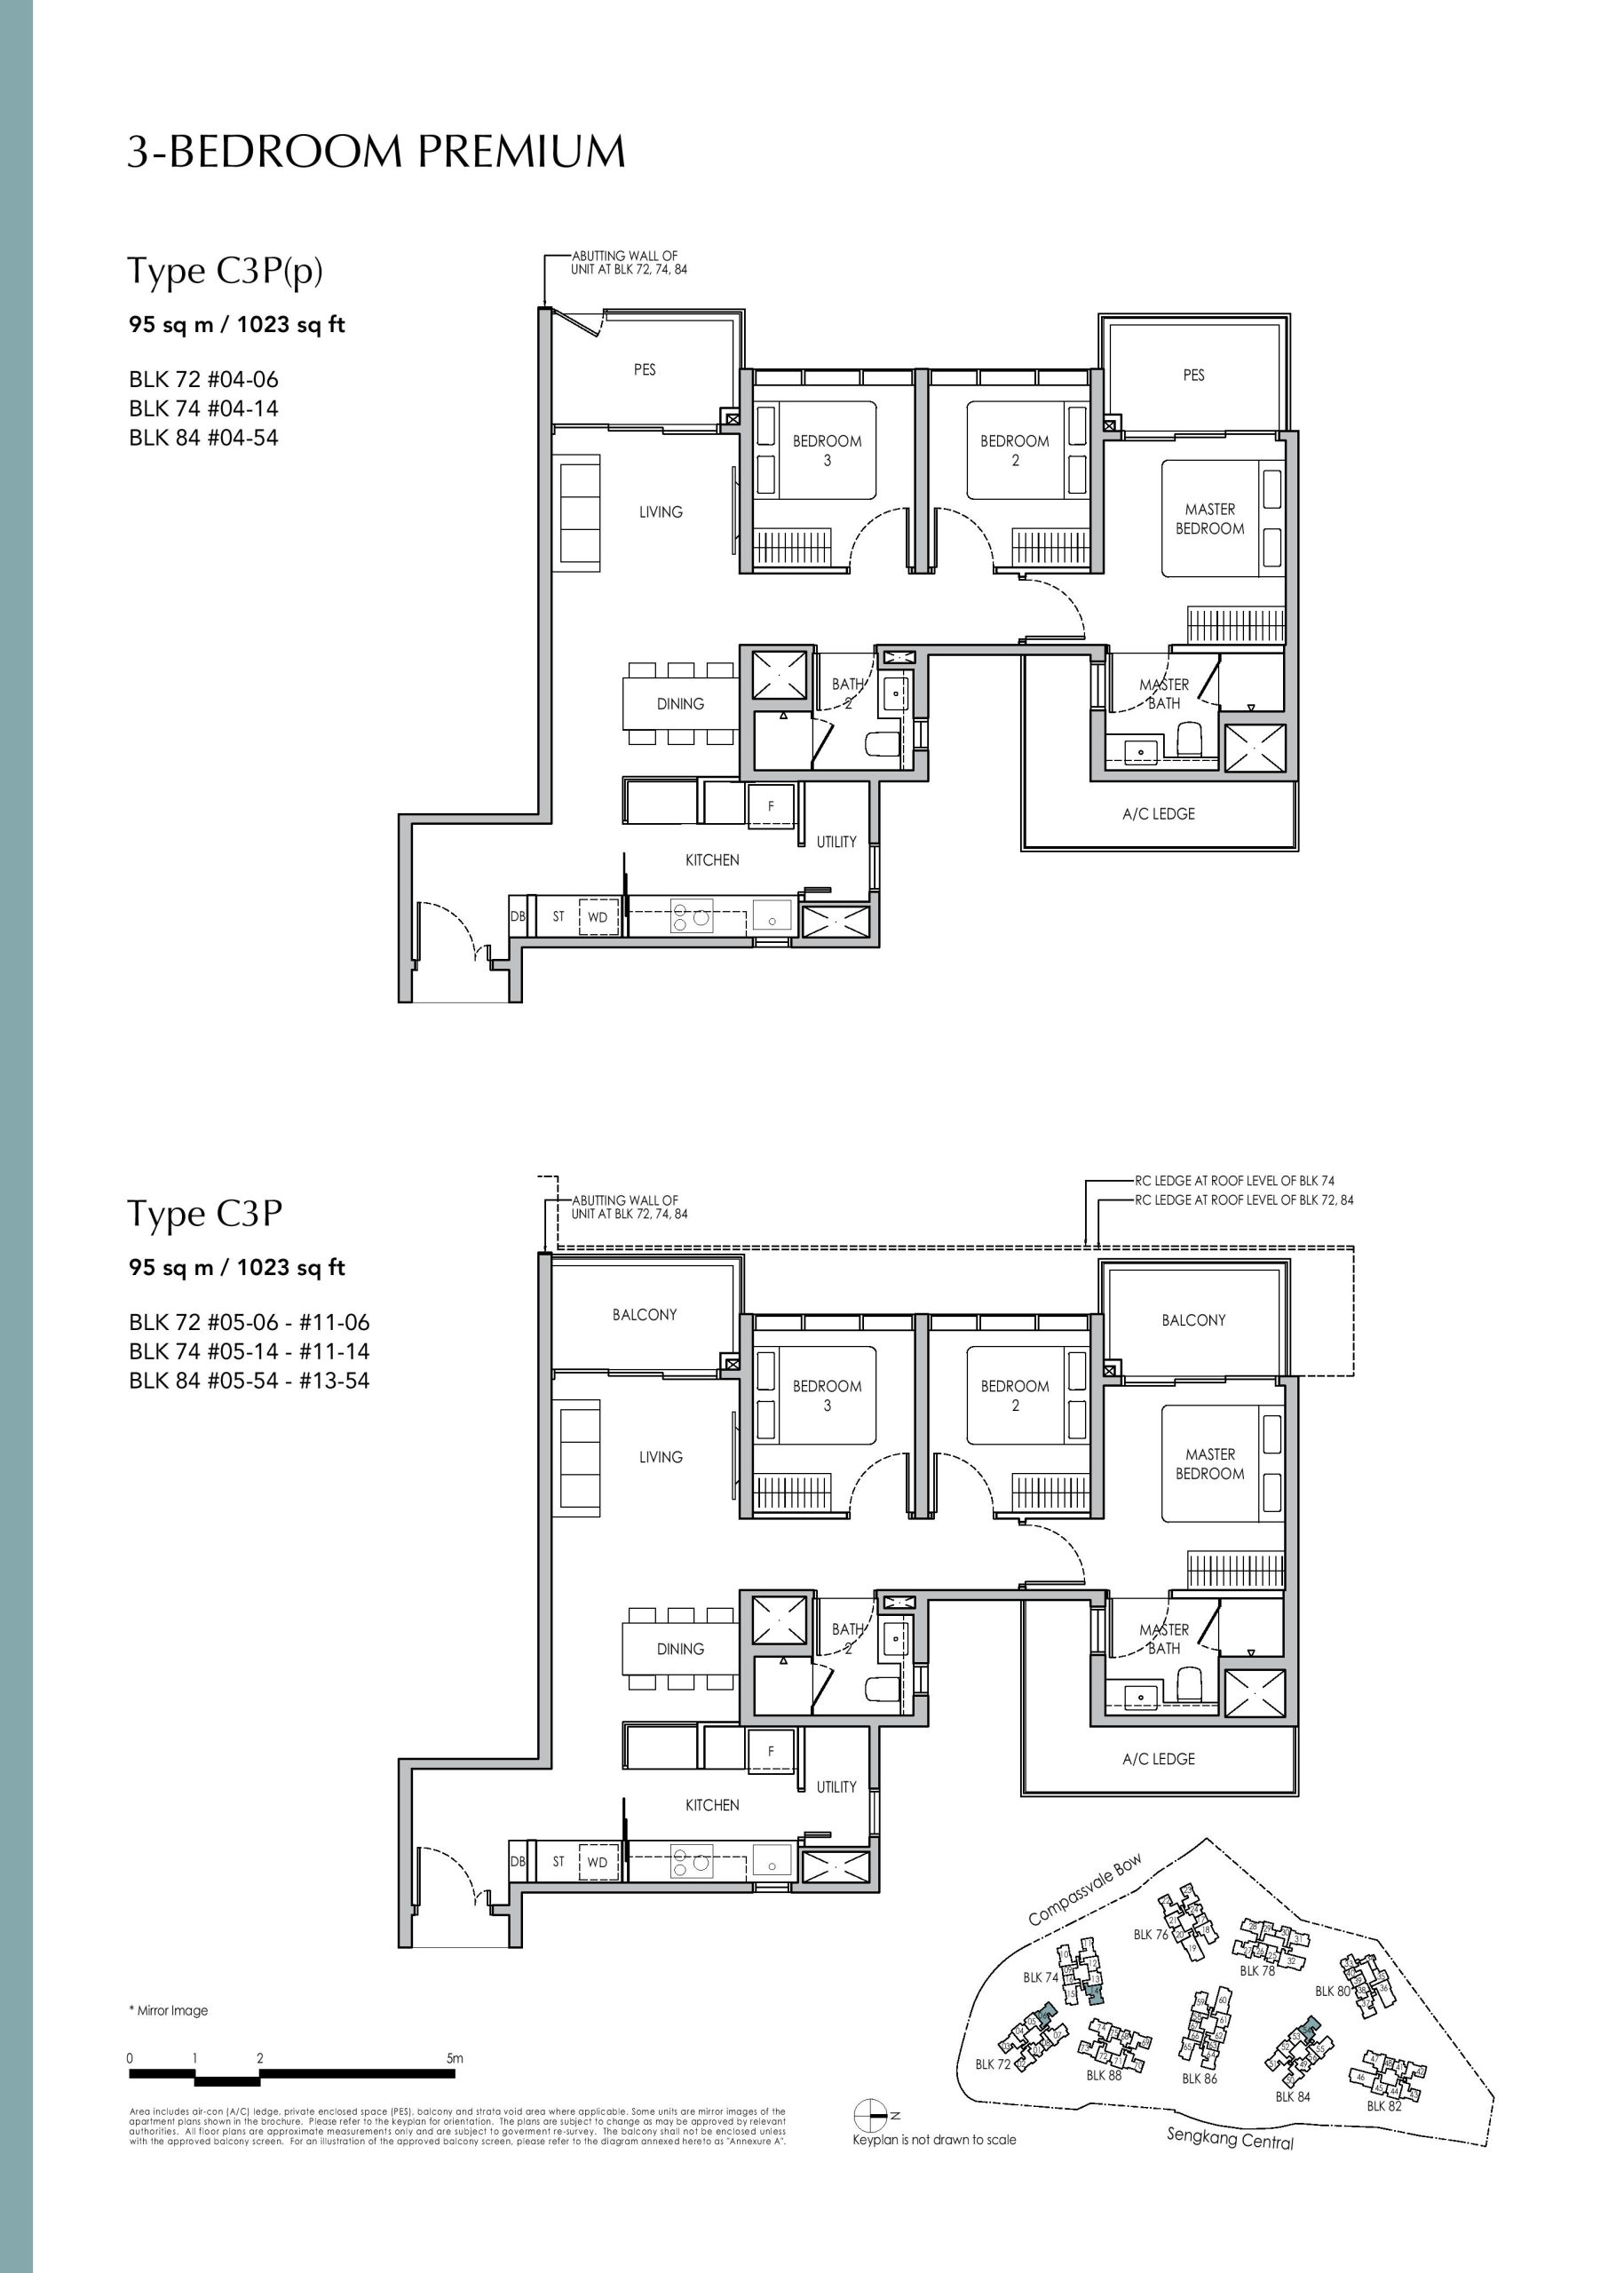 Sengkang Grand Residences 3 Bedroom Premium Type C3P(p), C3p Floor Plans